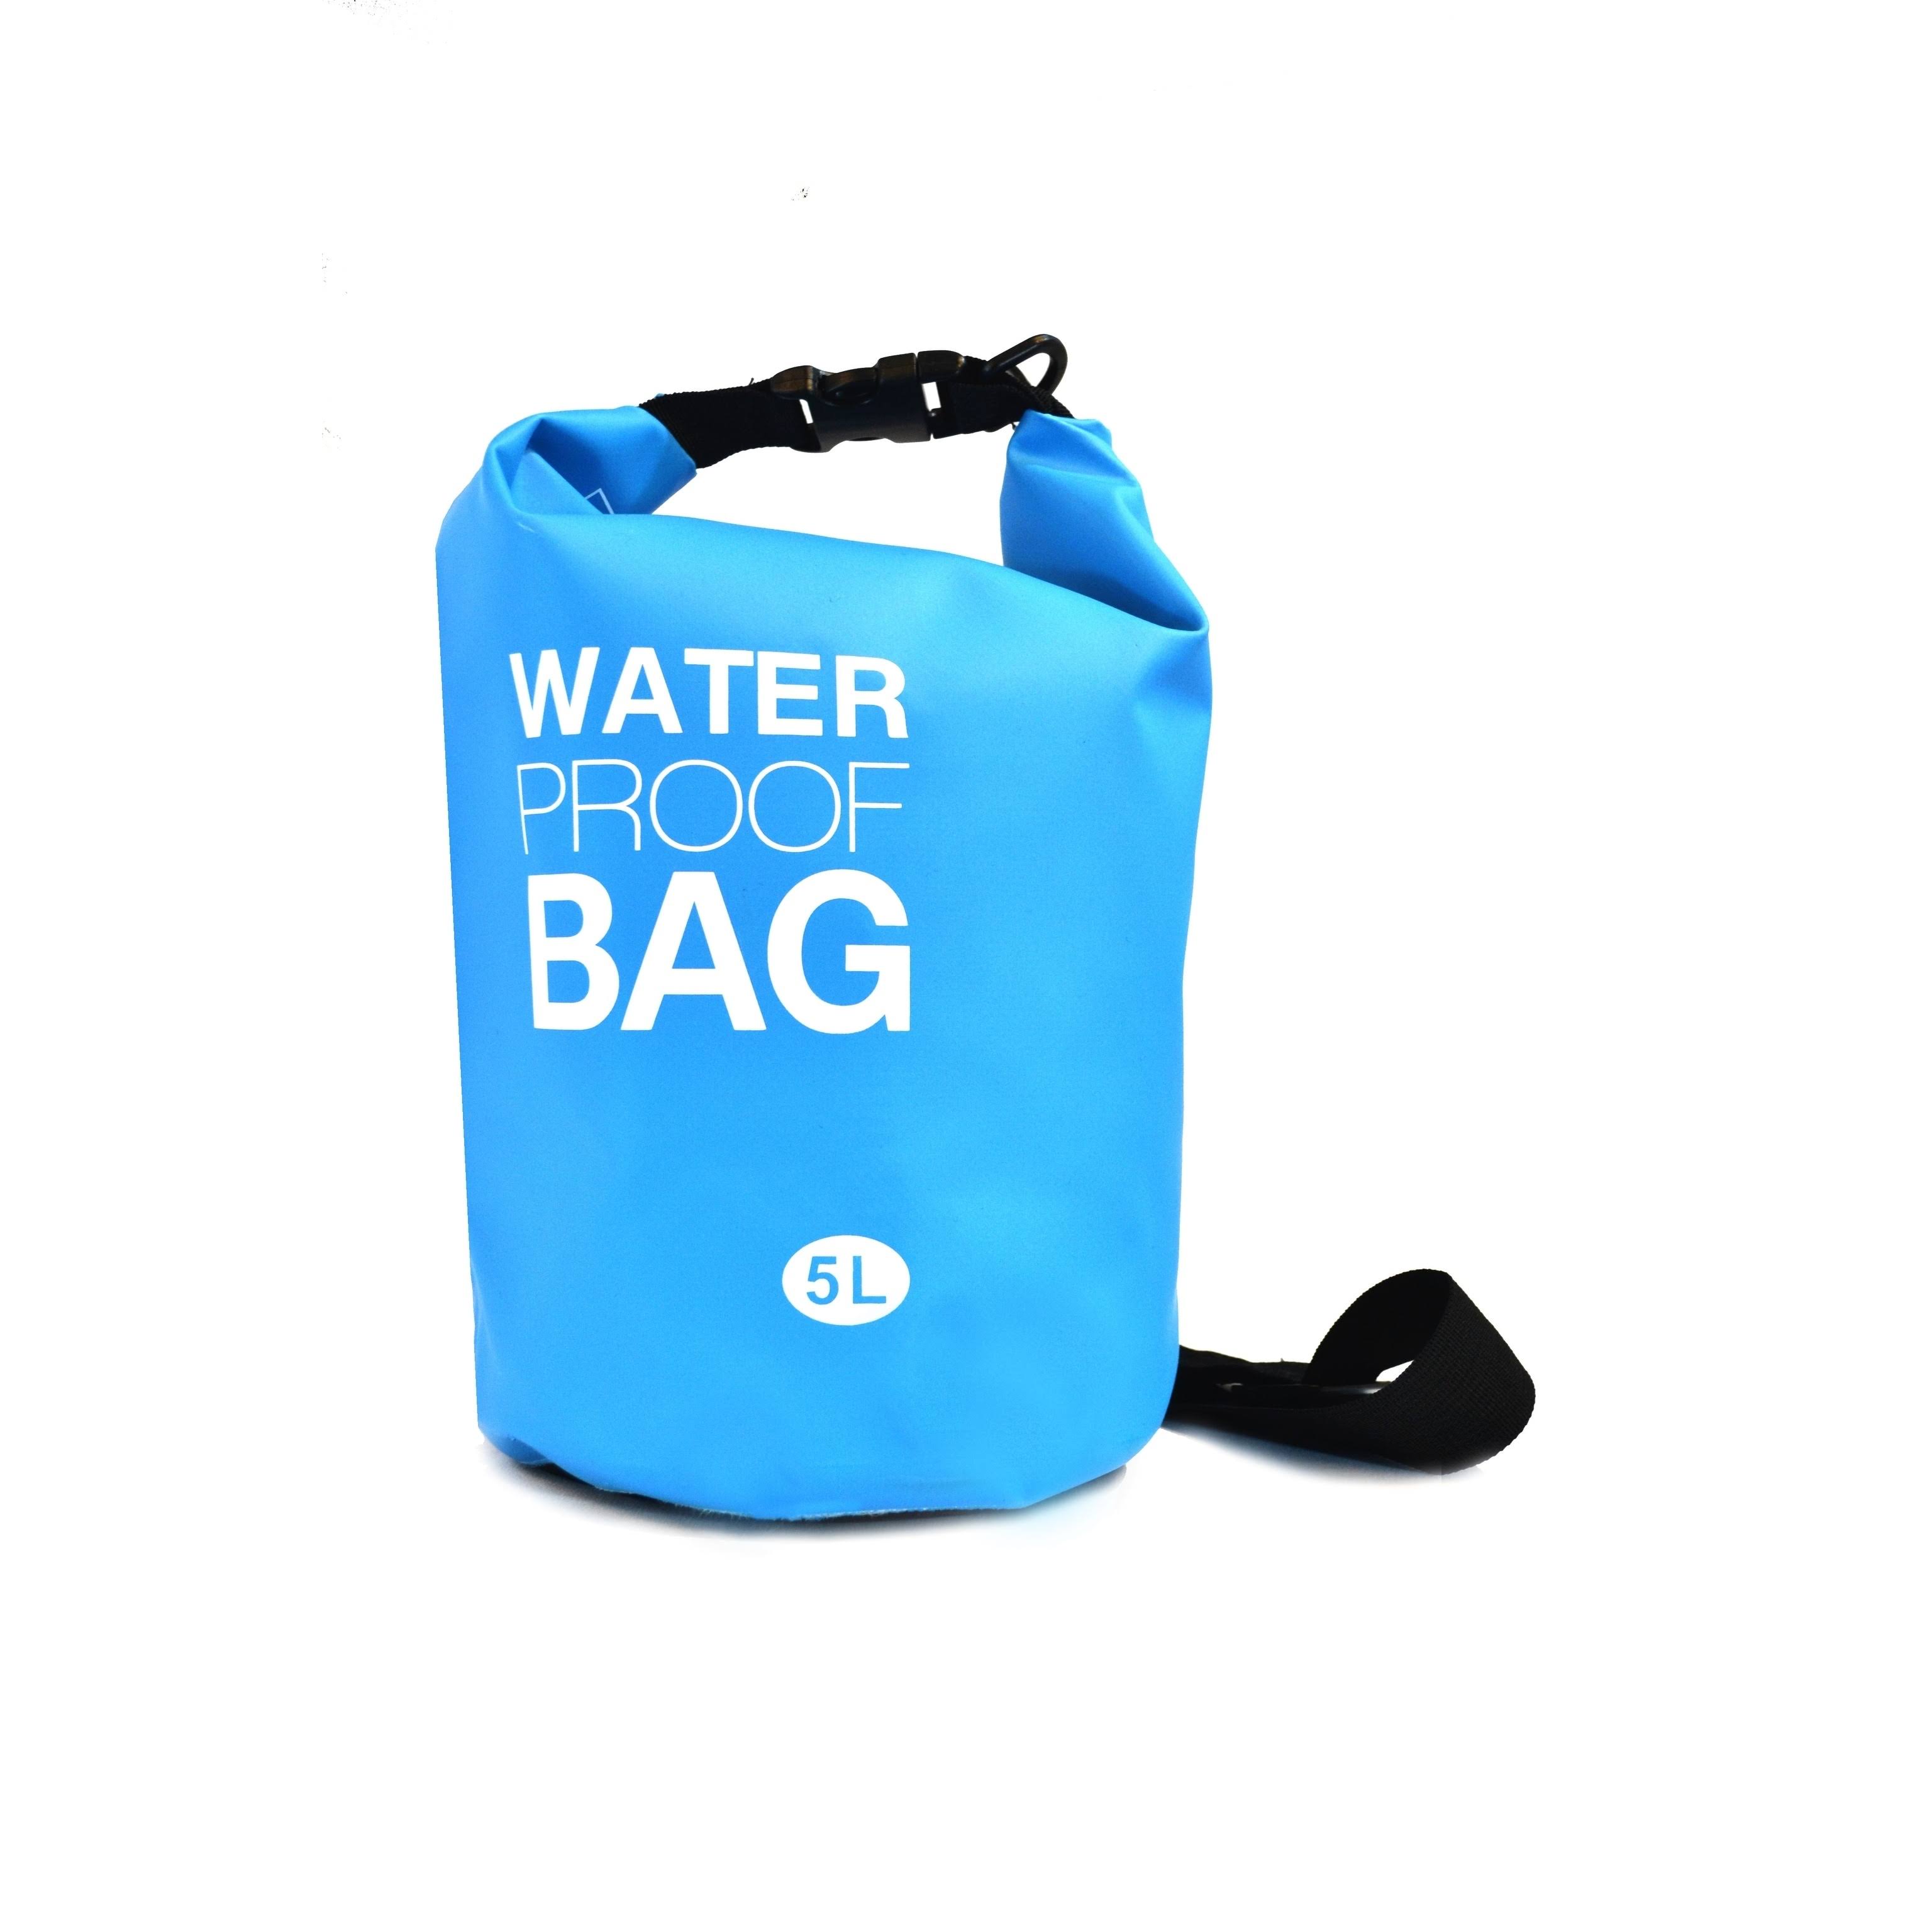 5L Water Proof Bags Blue / LIGHT BLUE